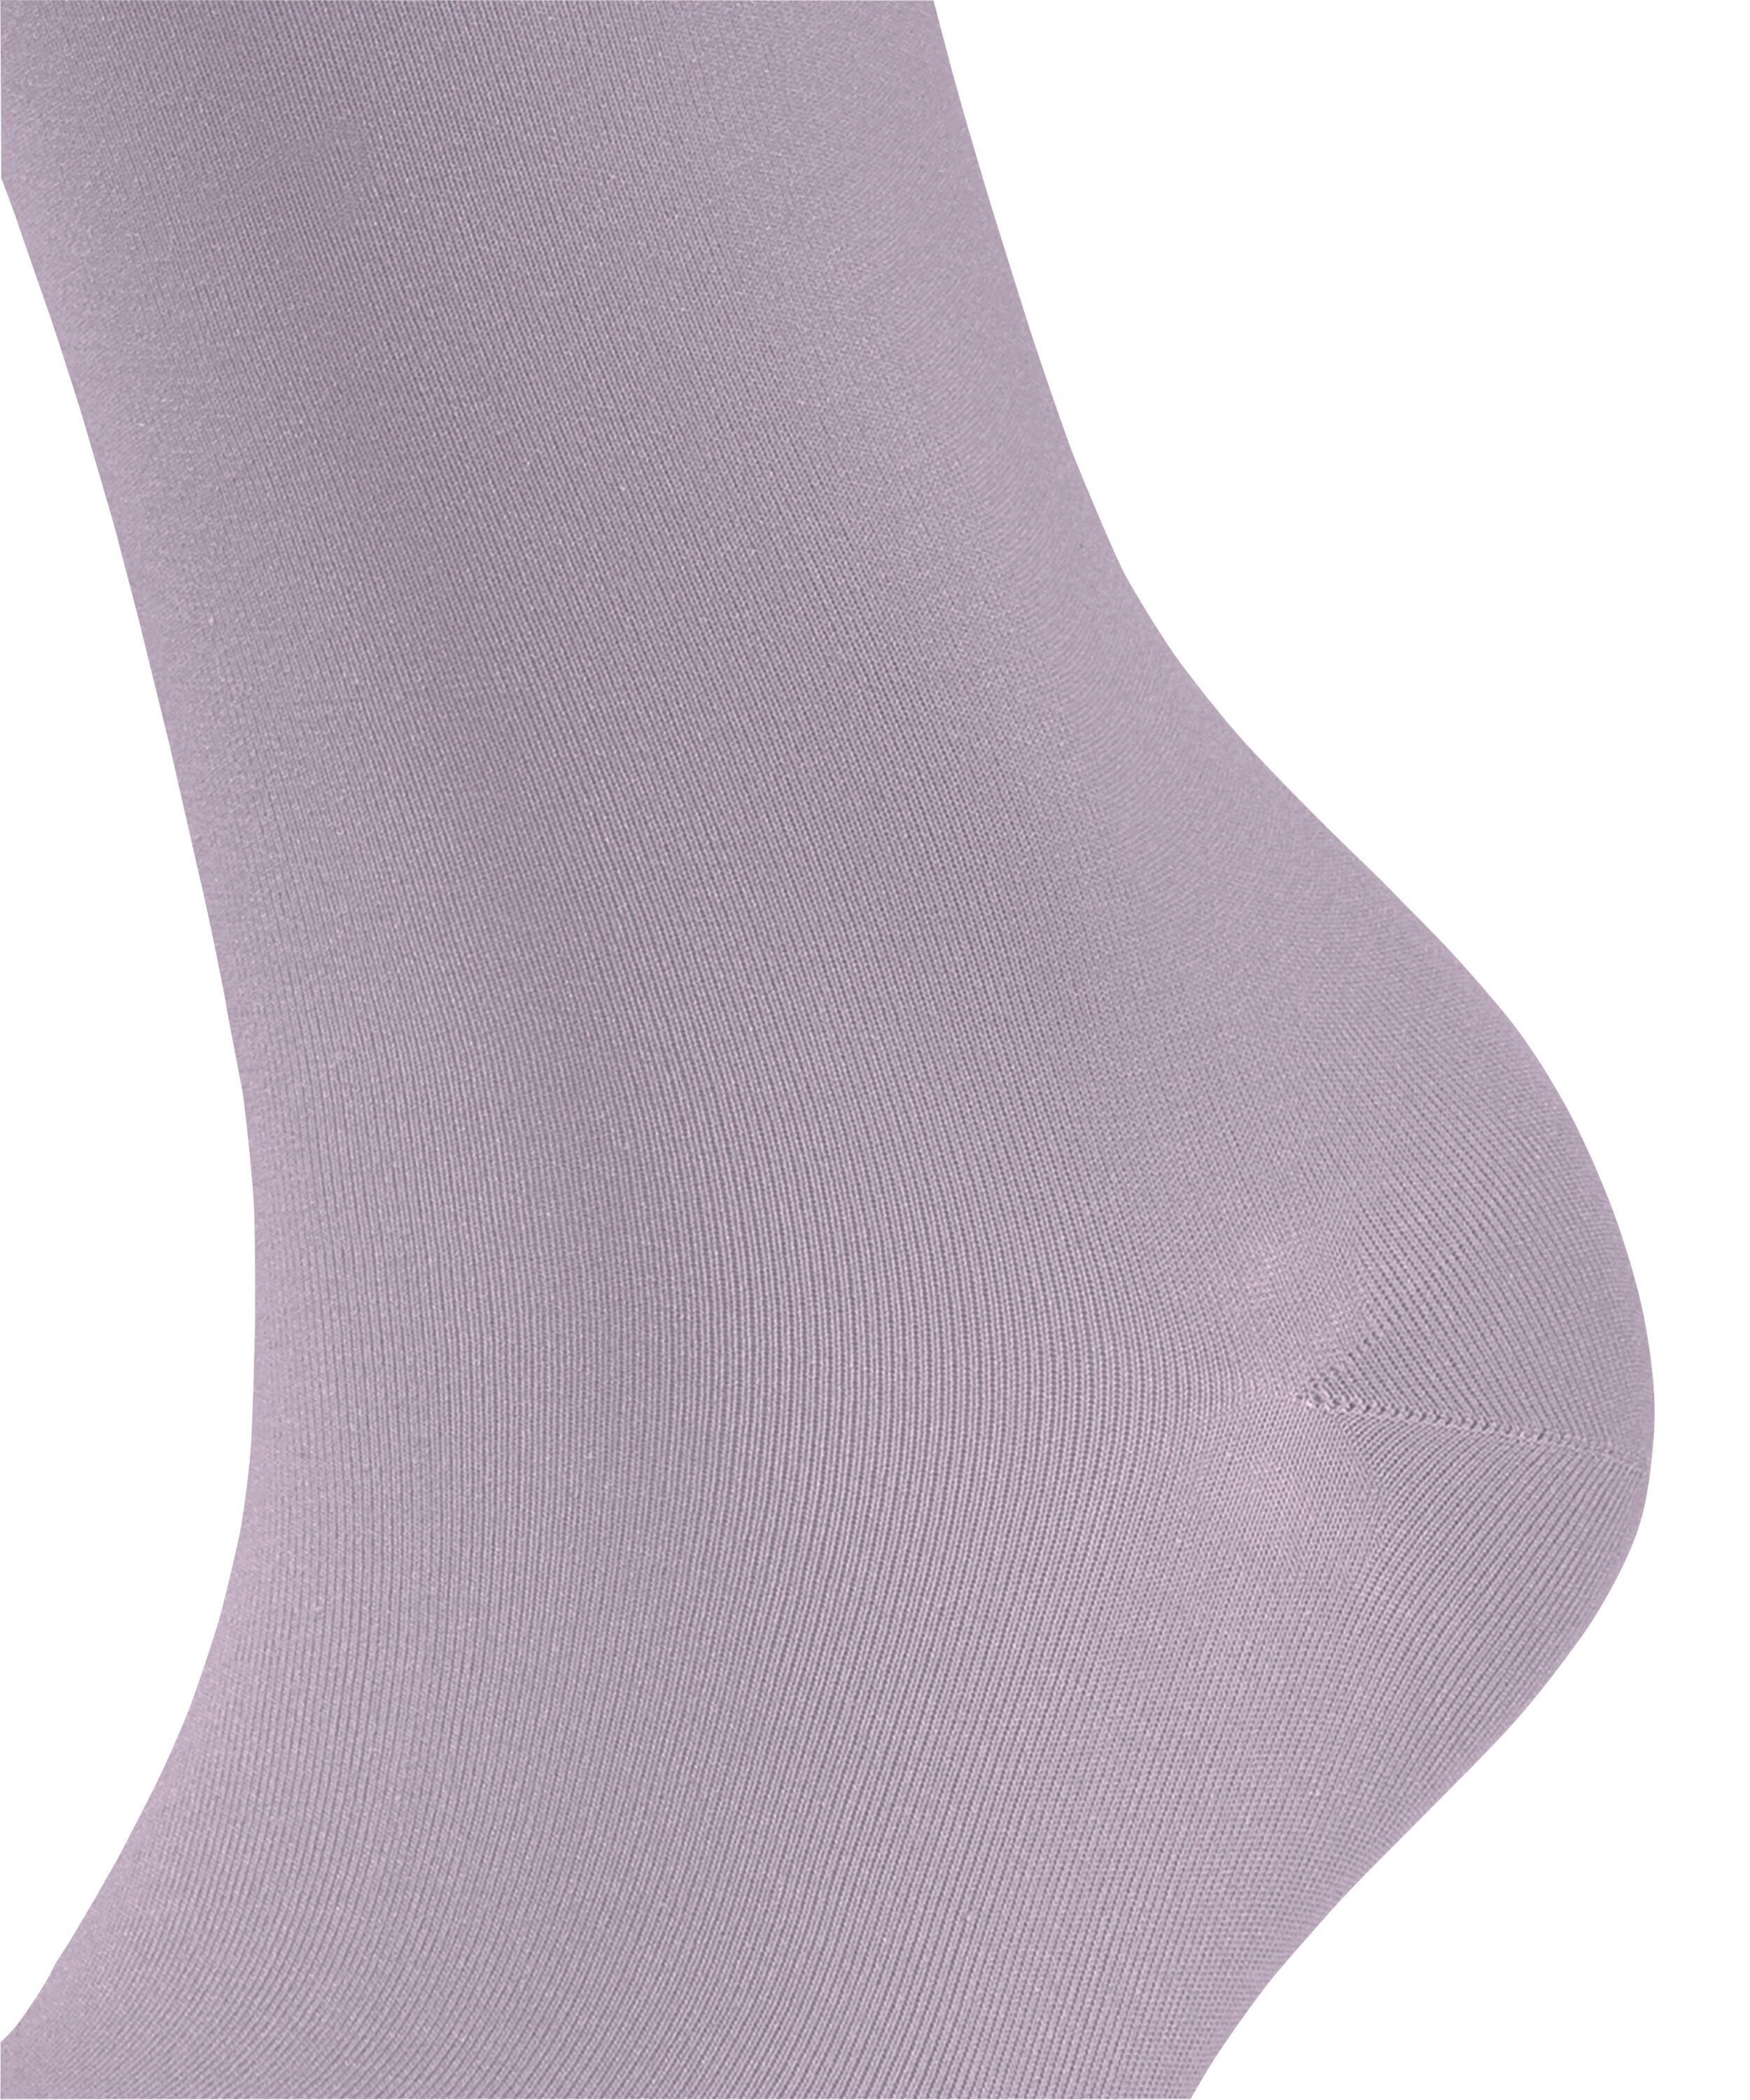 tint FALKE (1-Paar) lilac (8678) Cotton Socken Touch